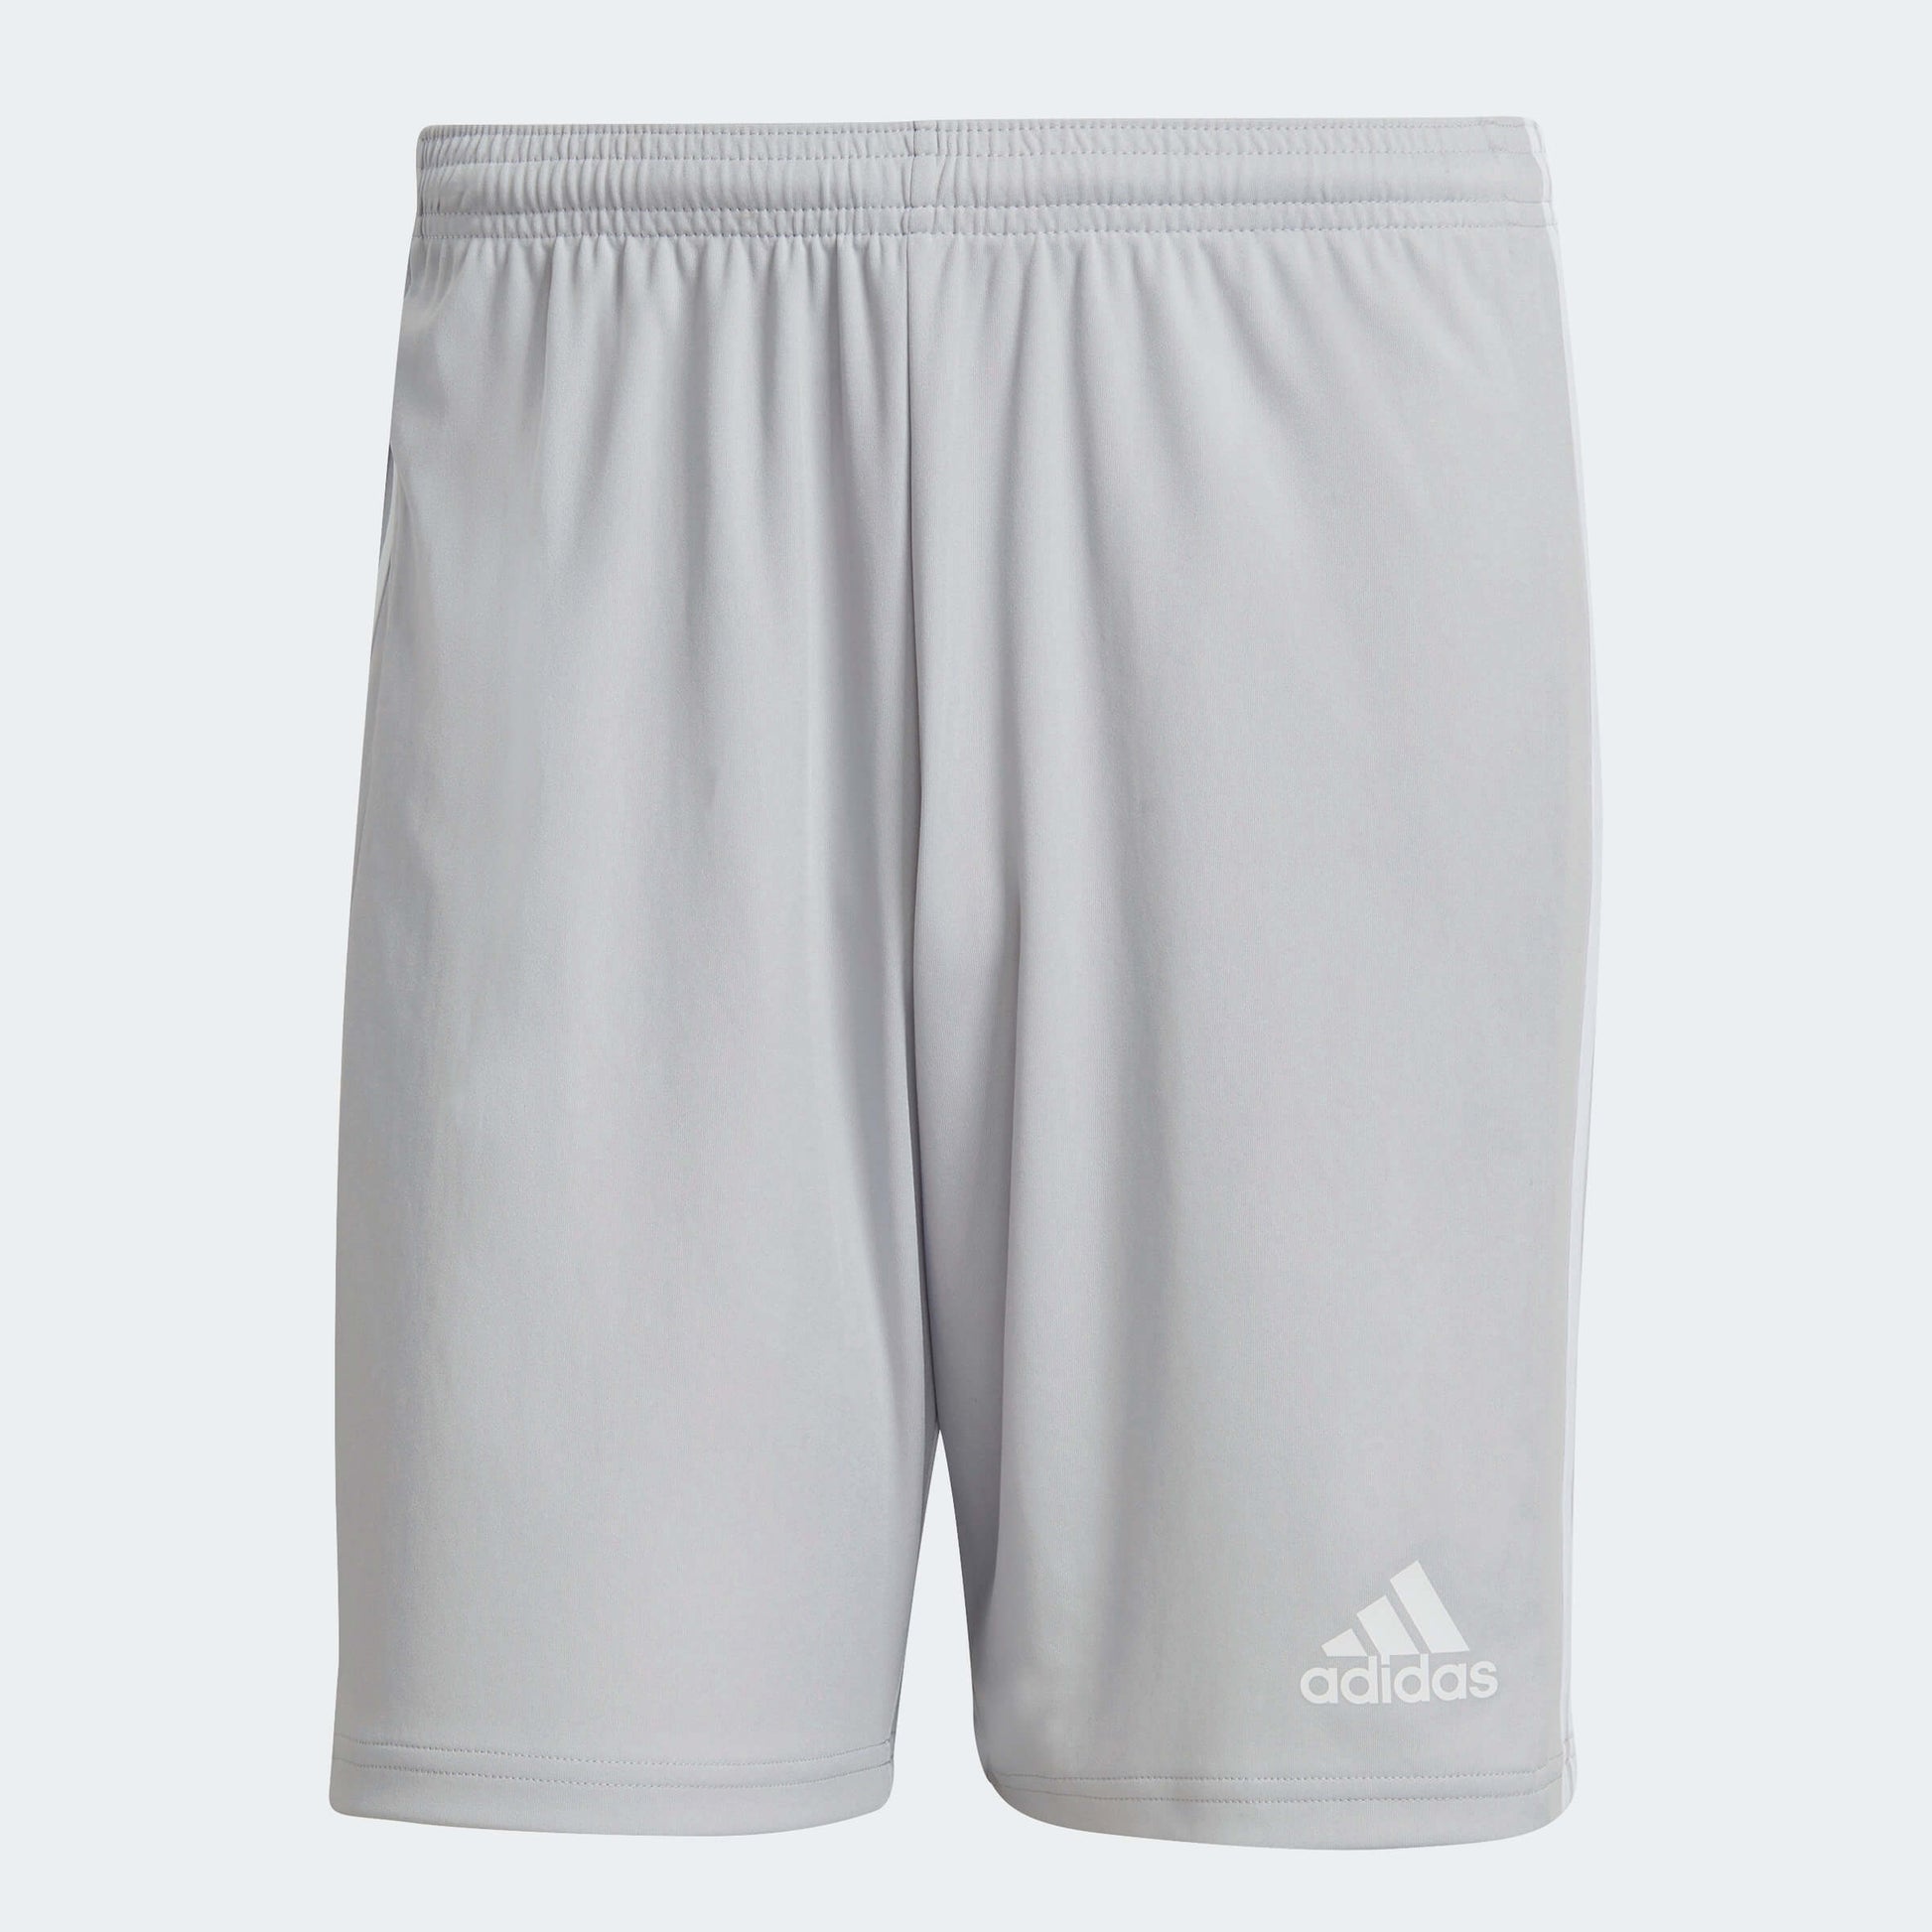  adidas Squadra 21 Shorts Light Grey-White (Front)